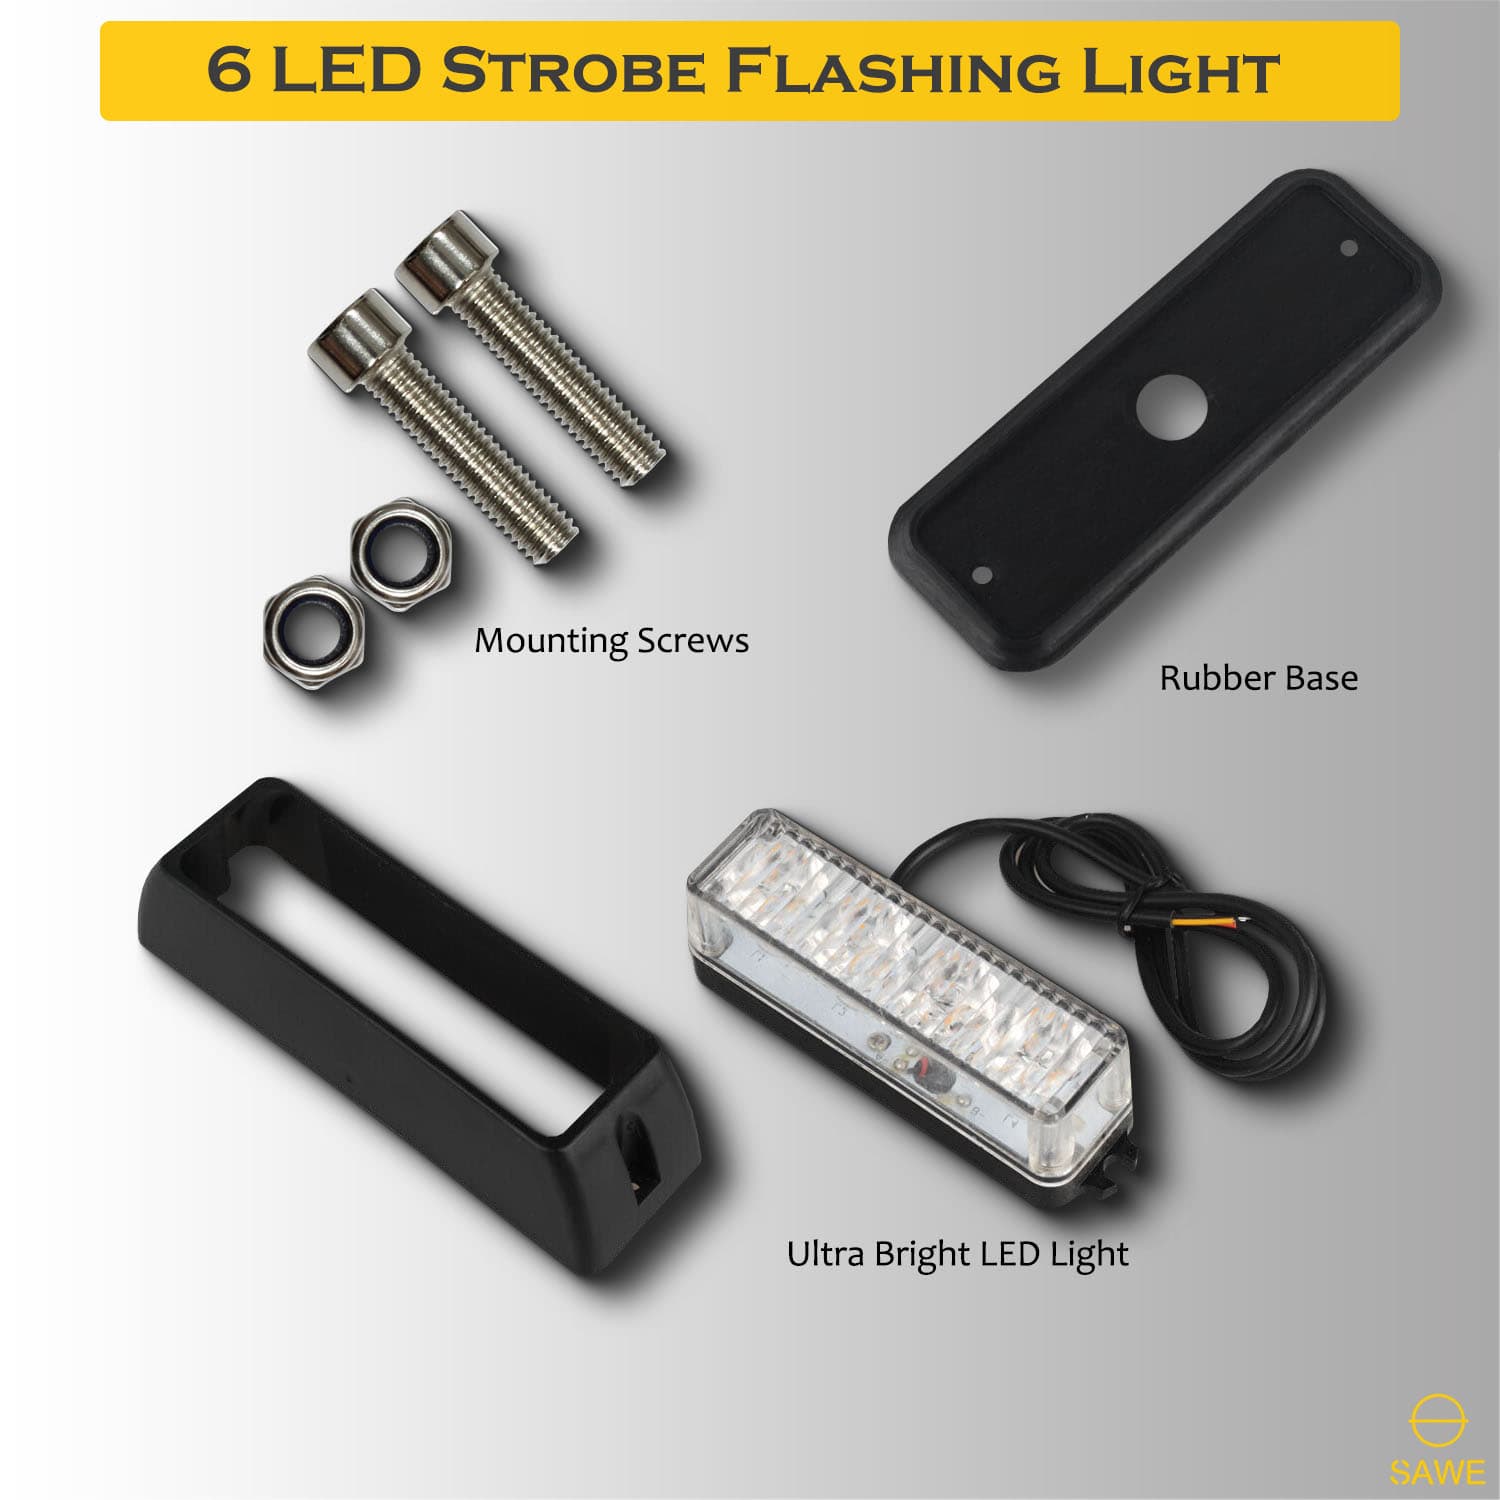 Premier Emergency LED Strobe Lights Bar for Offroad Car Truck Warning Hazard Flash Grille and Surface Mount Light - Amber 6-LED